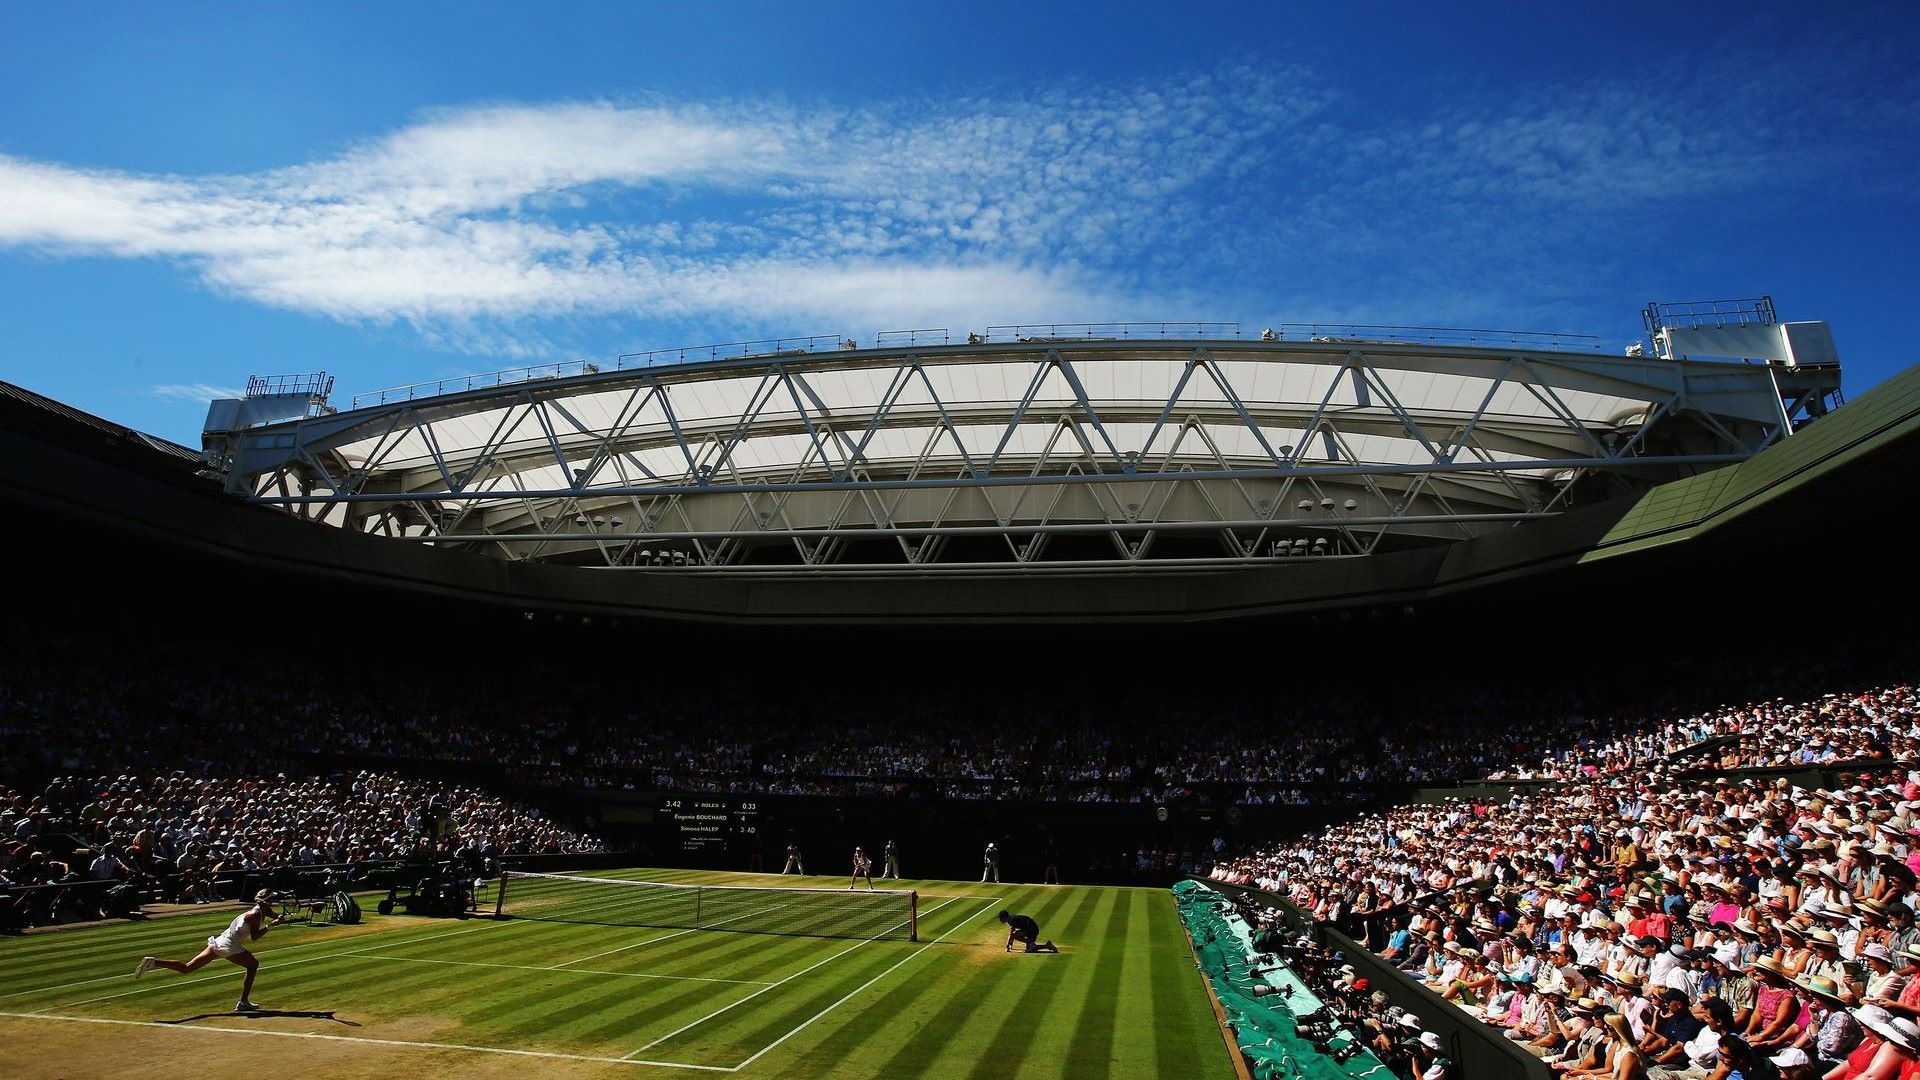 Wimbledon σήμερα 30.06. Πρόγραμμα αγώνων, Προβλέψεις & Προγνωστικά